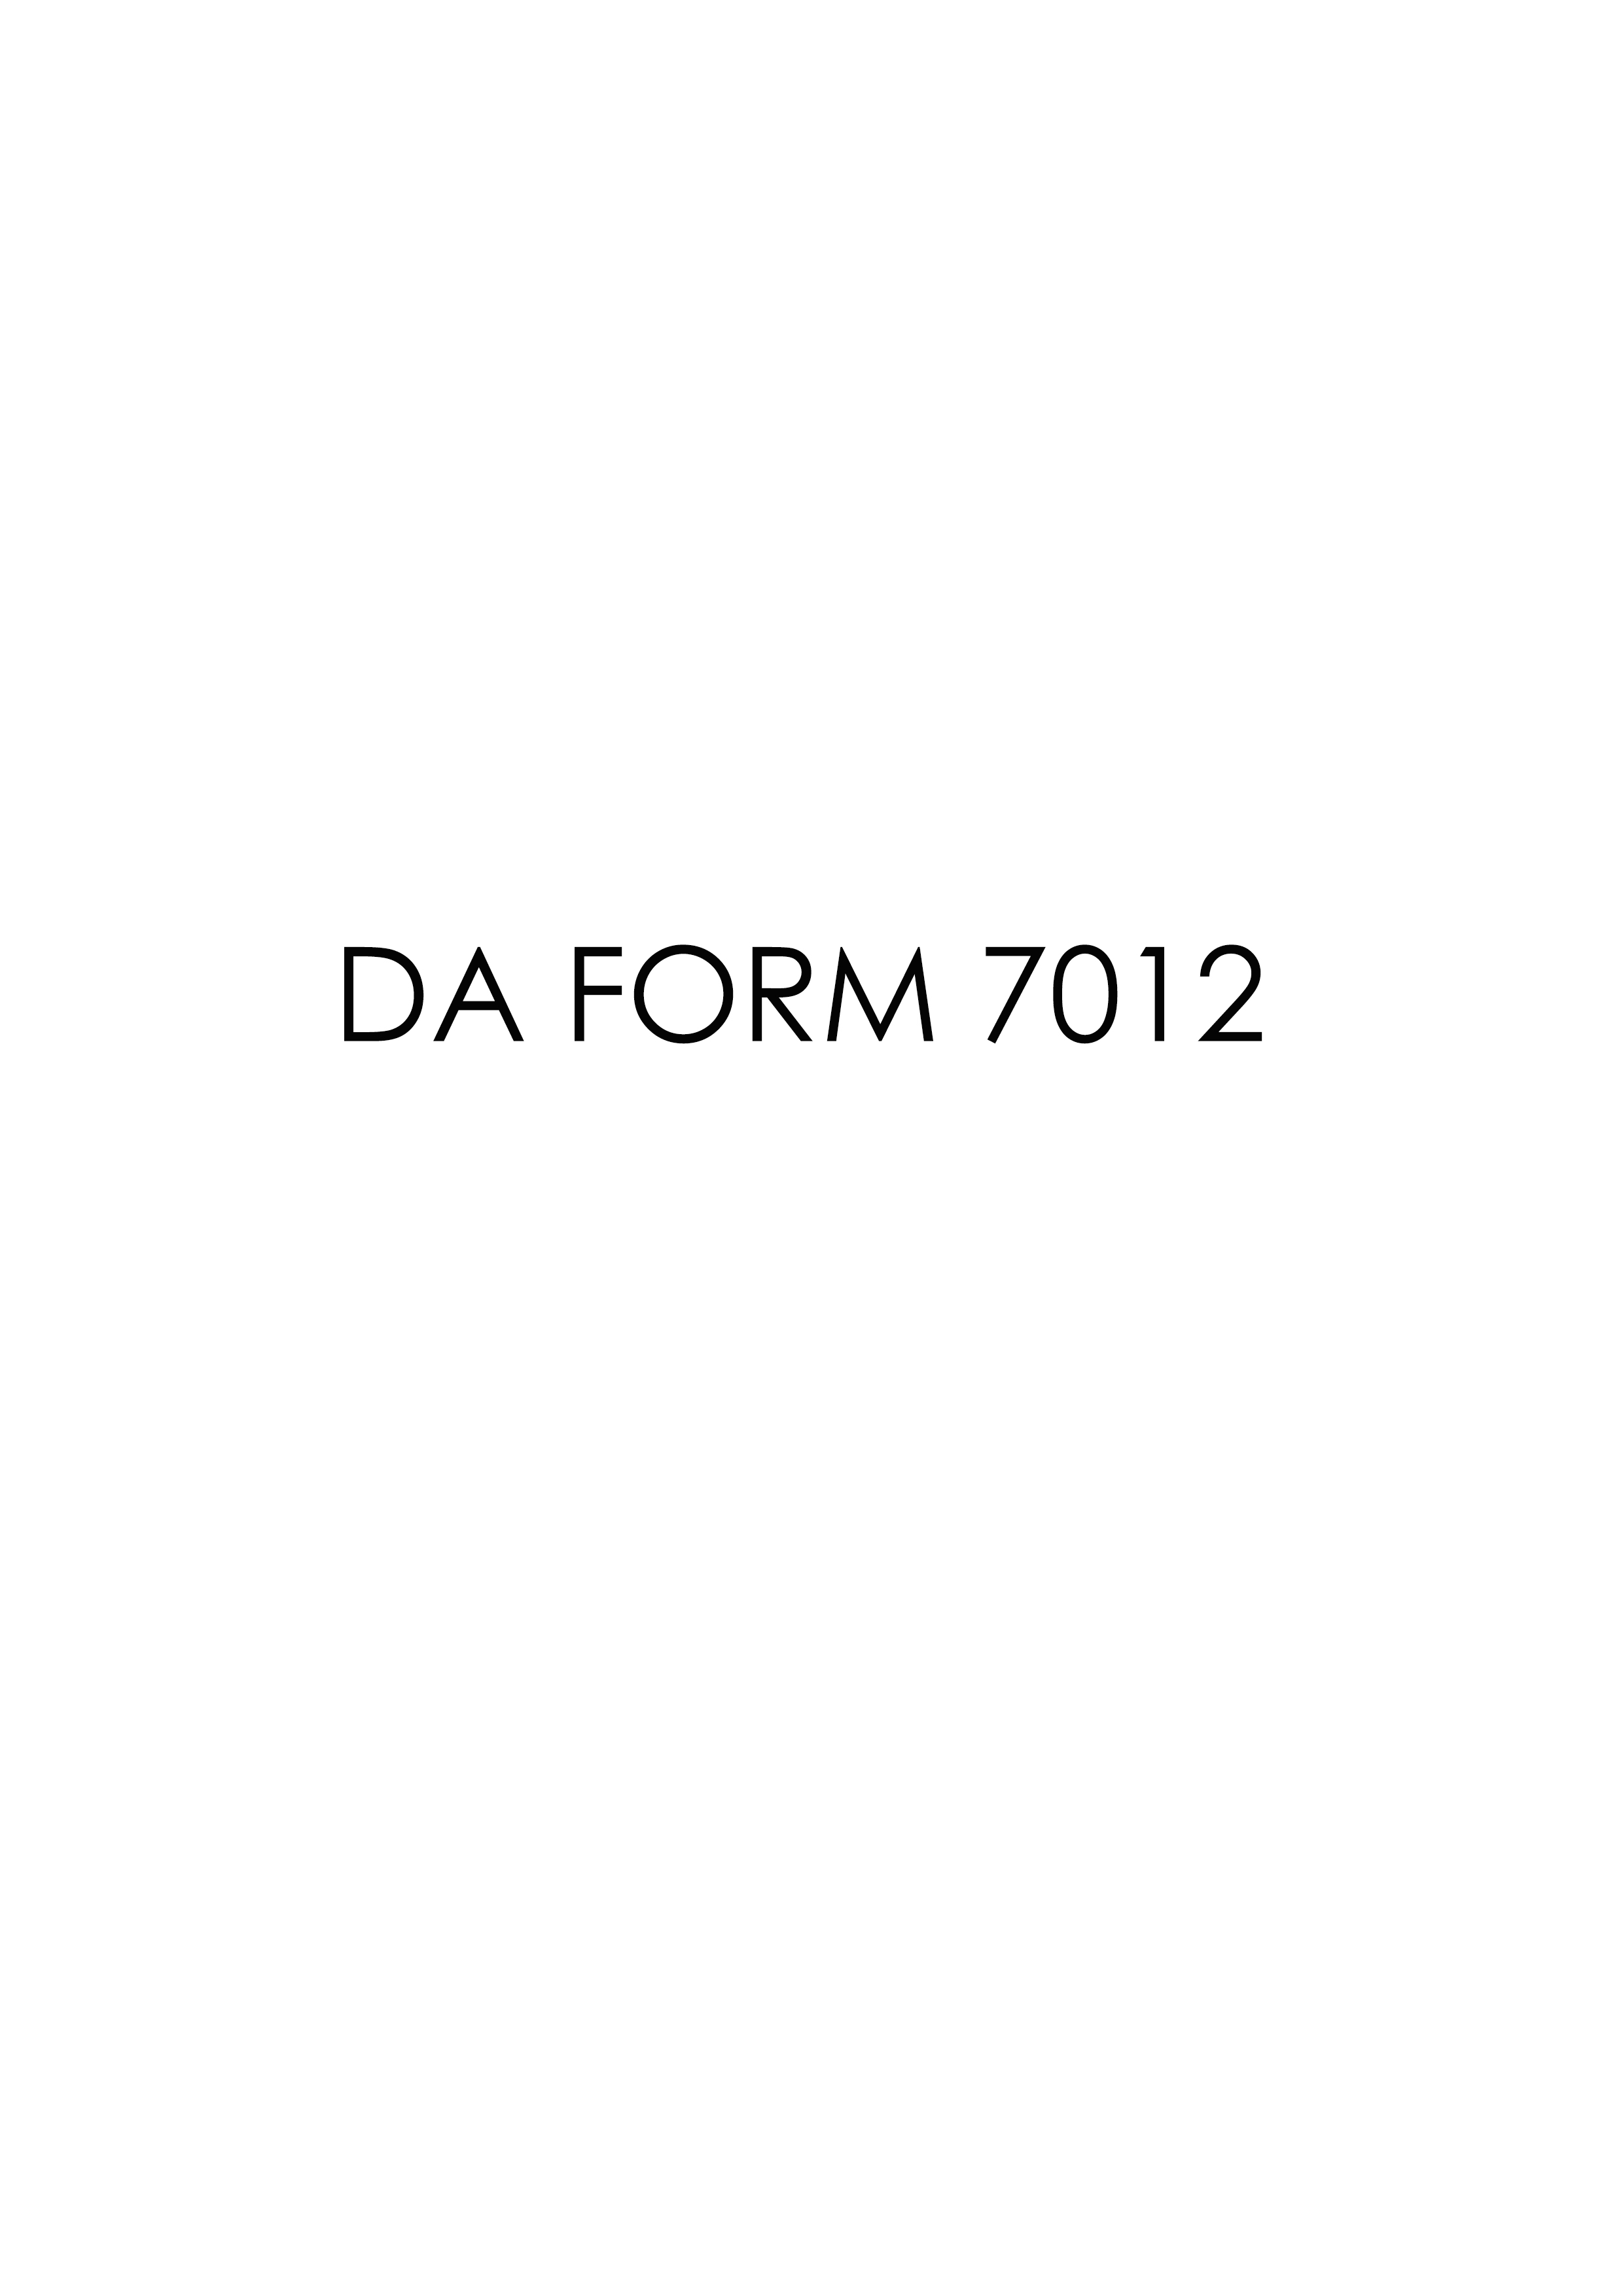 da Form 7012 fillable